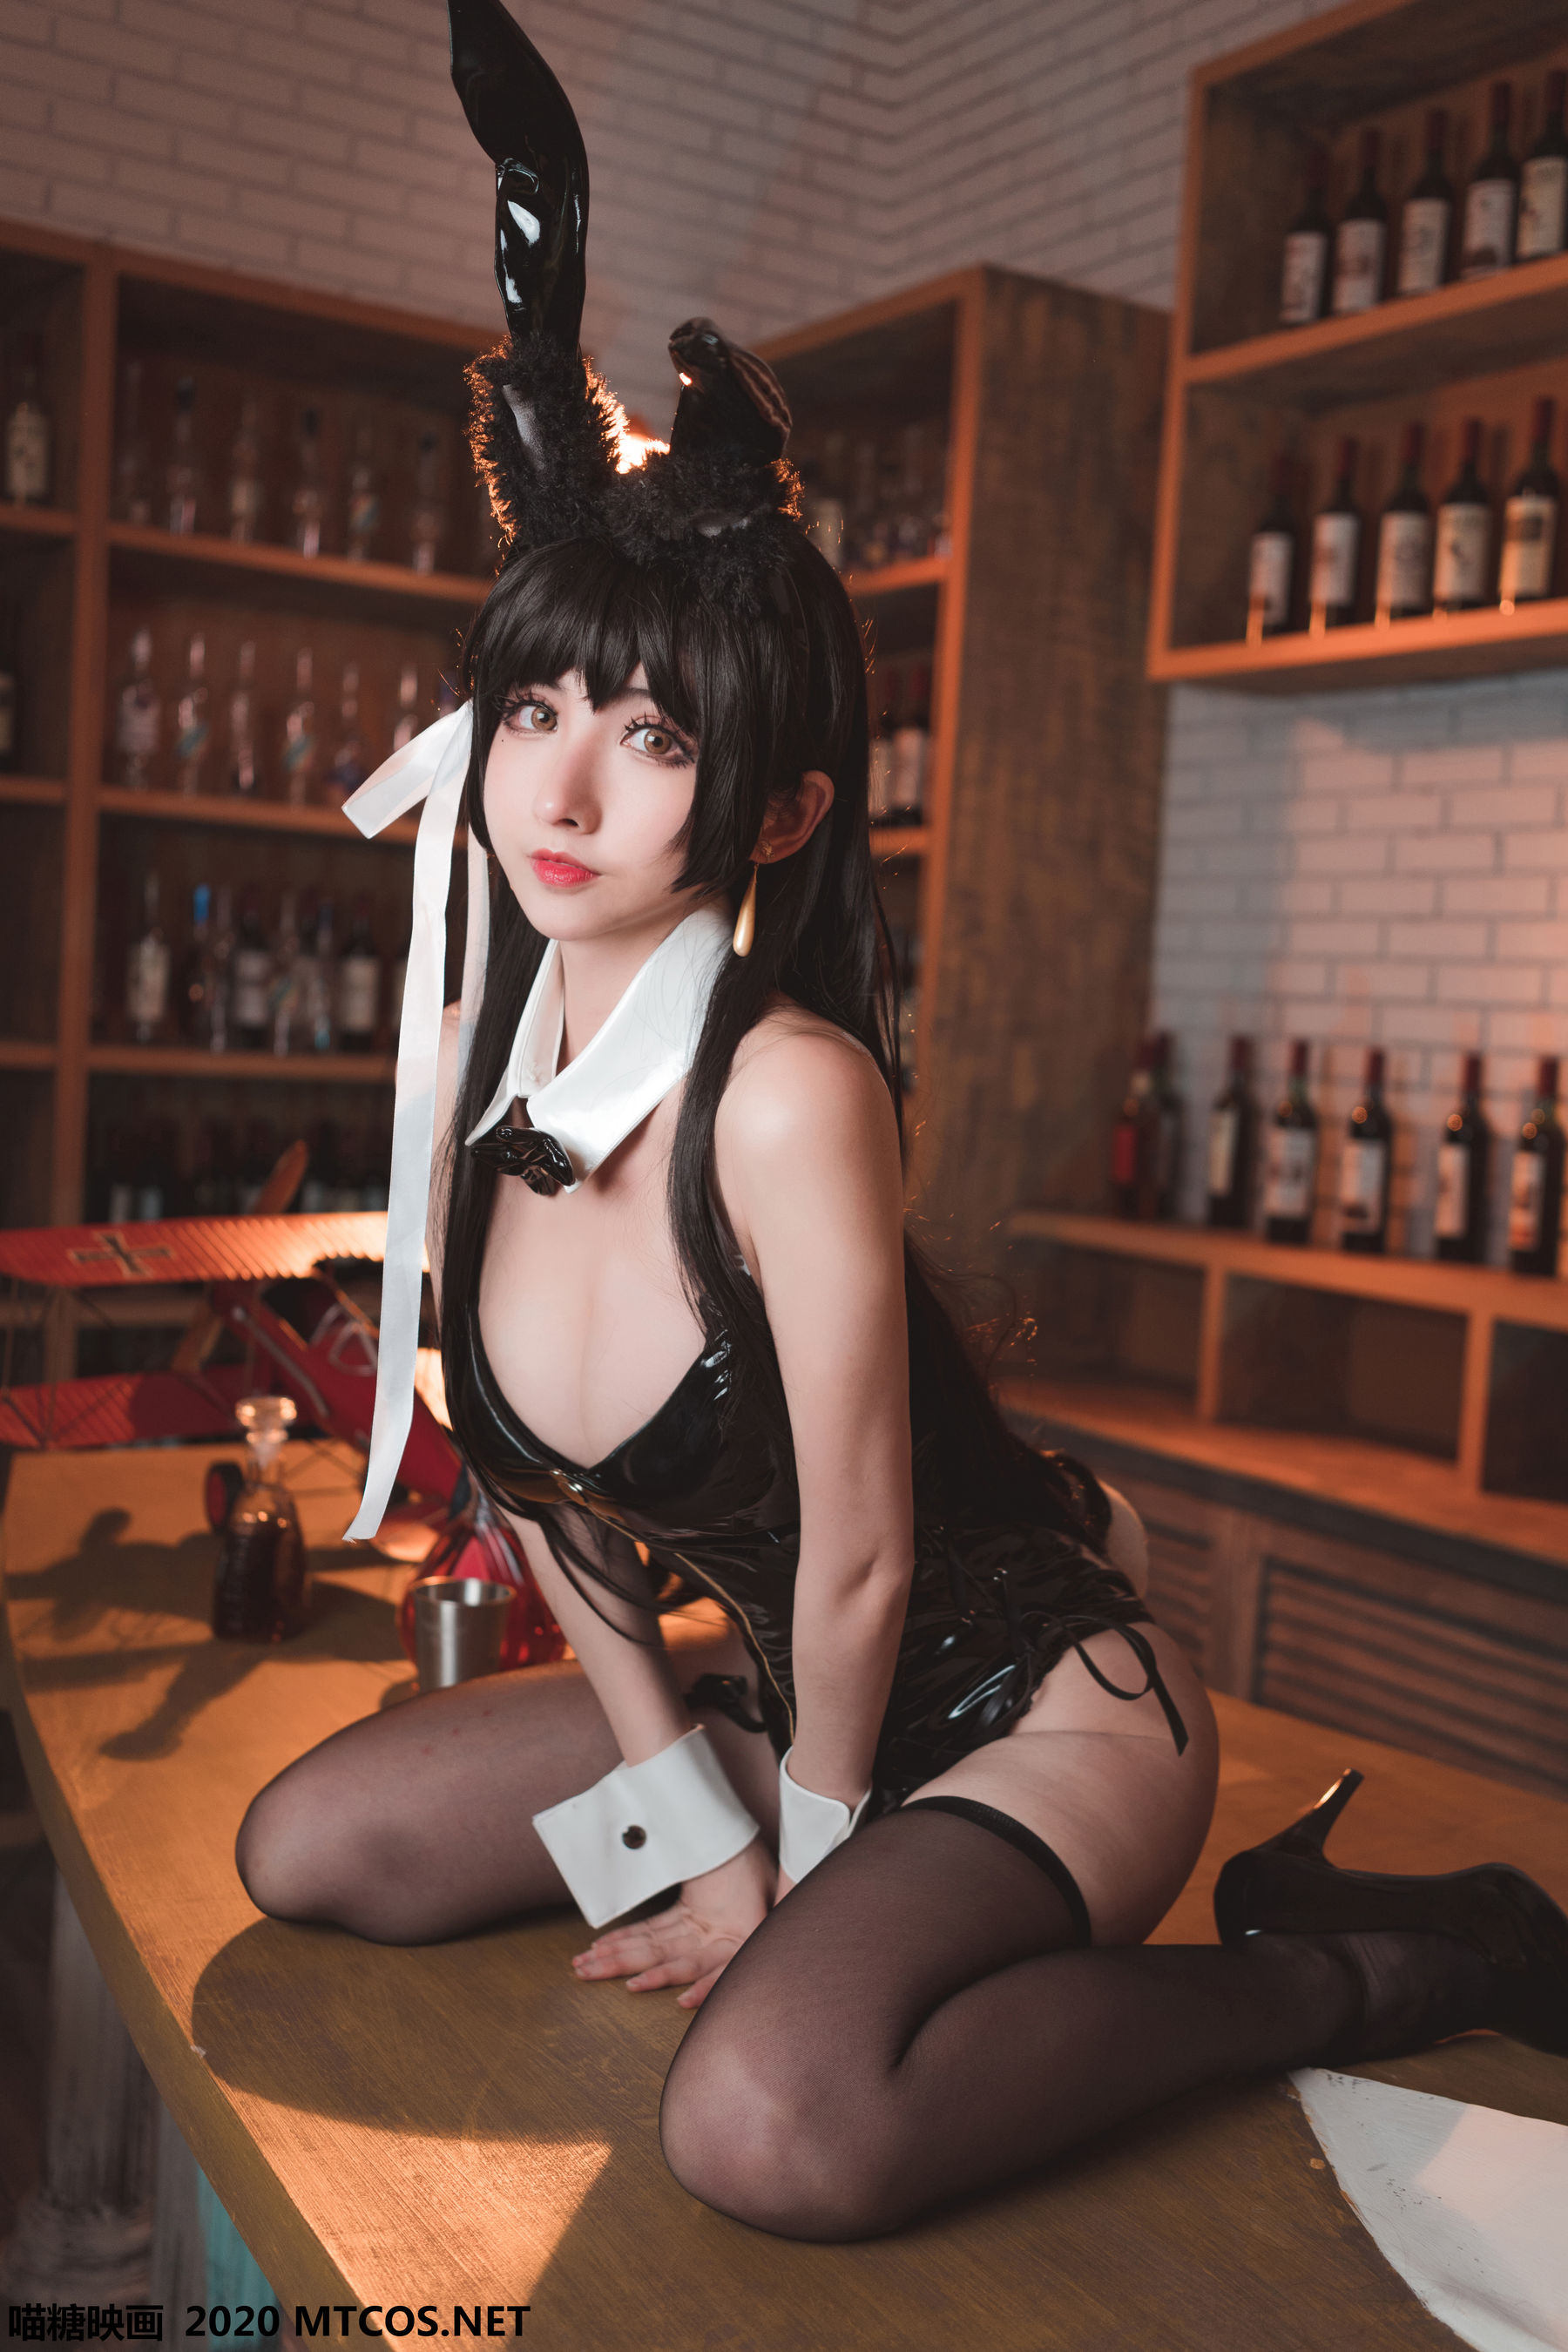 [糖] TML.007 “Cool Scuba Rabbit Girl” Photo Album